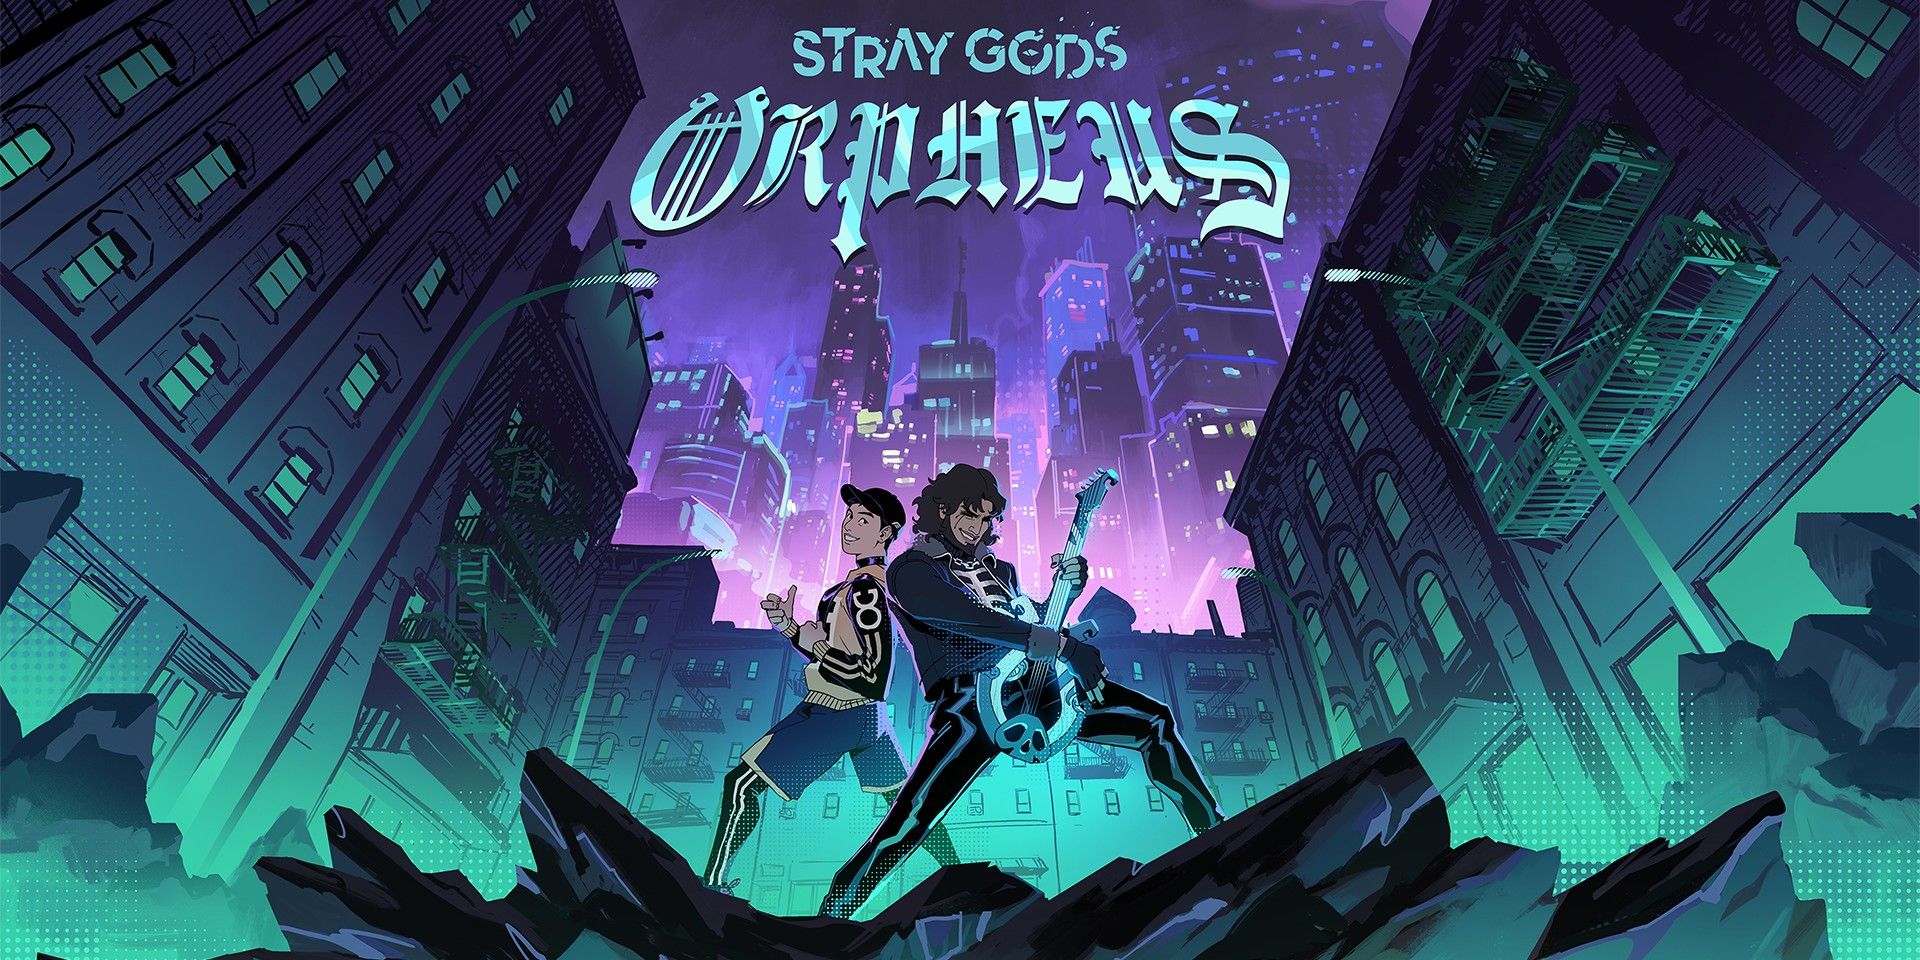 Stray Gods Orpheus Key Art yang memperlihatkan Hermes dan Orpheus, yang terakhir sedang bermain gitar, berdiri saling membelakangi di kota pada malam hari dengan judul di atas.